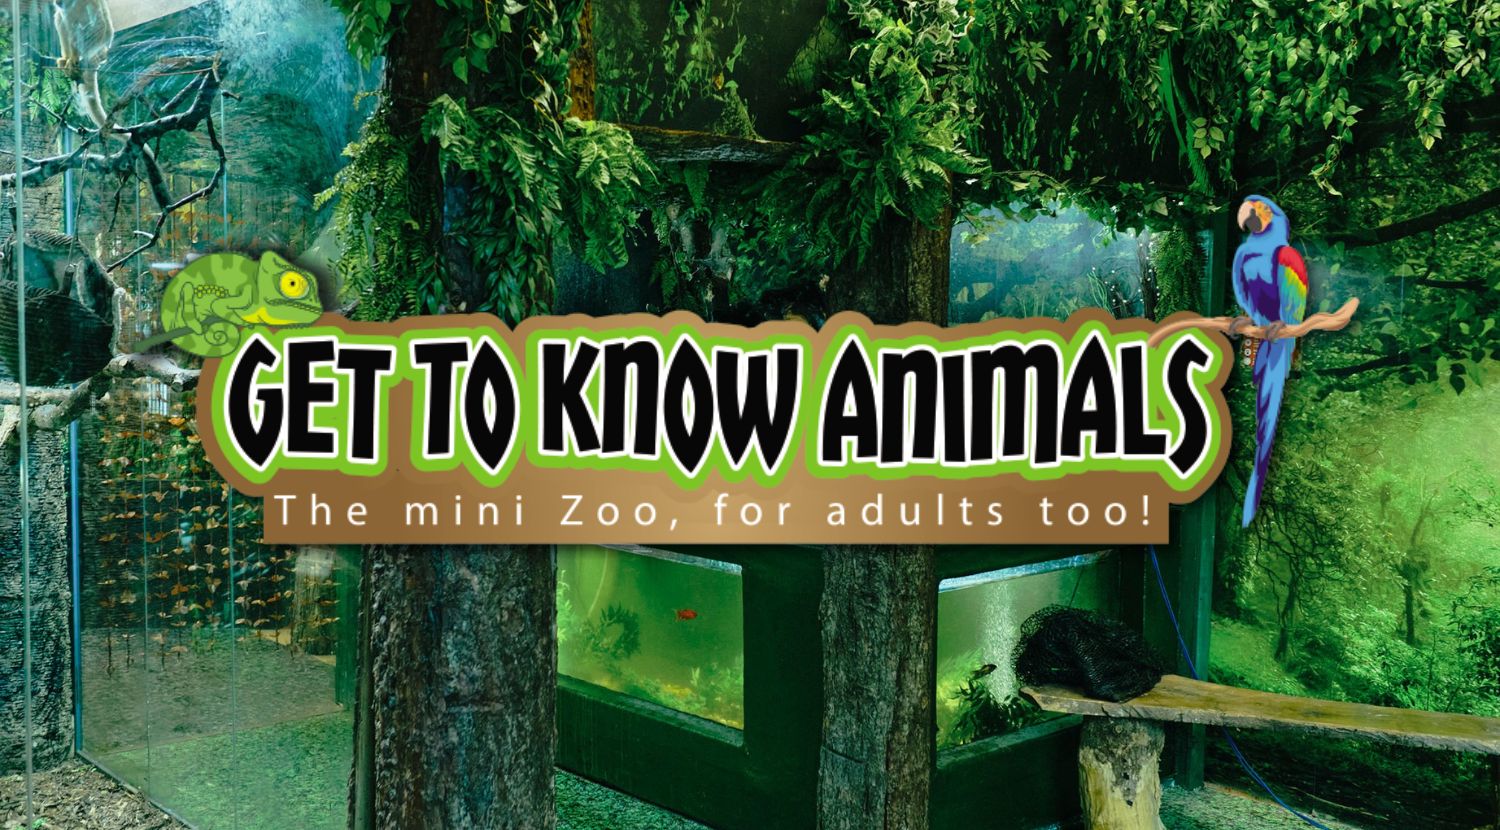 Get To Know Animals (GTKA)